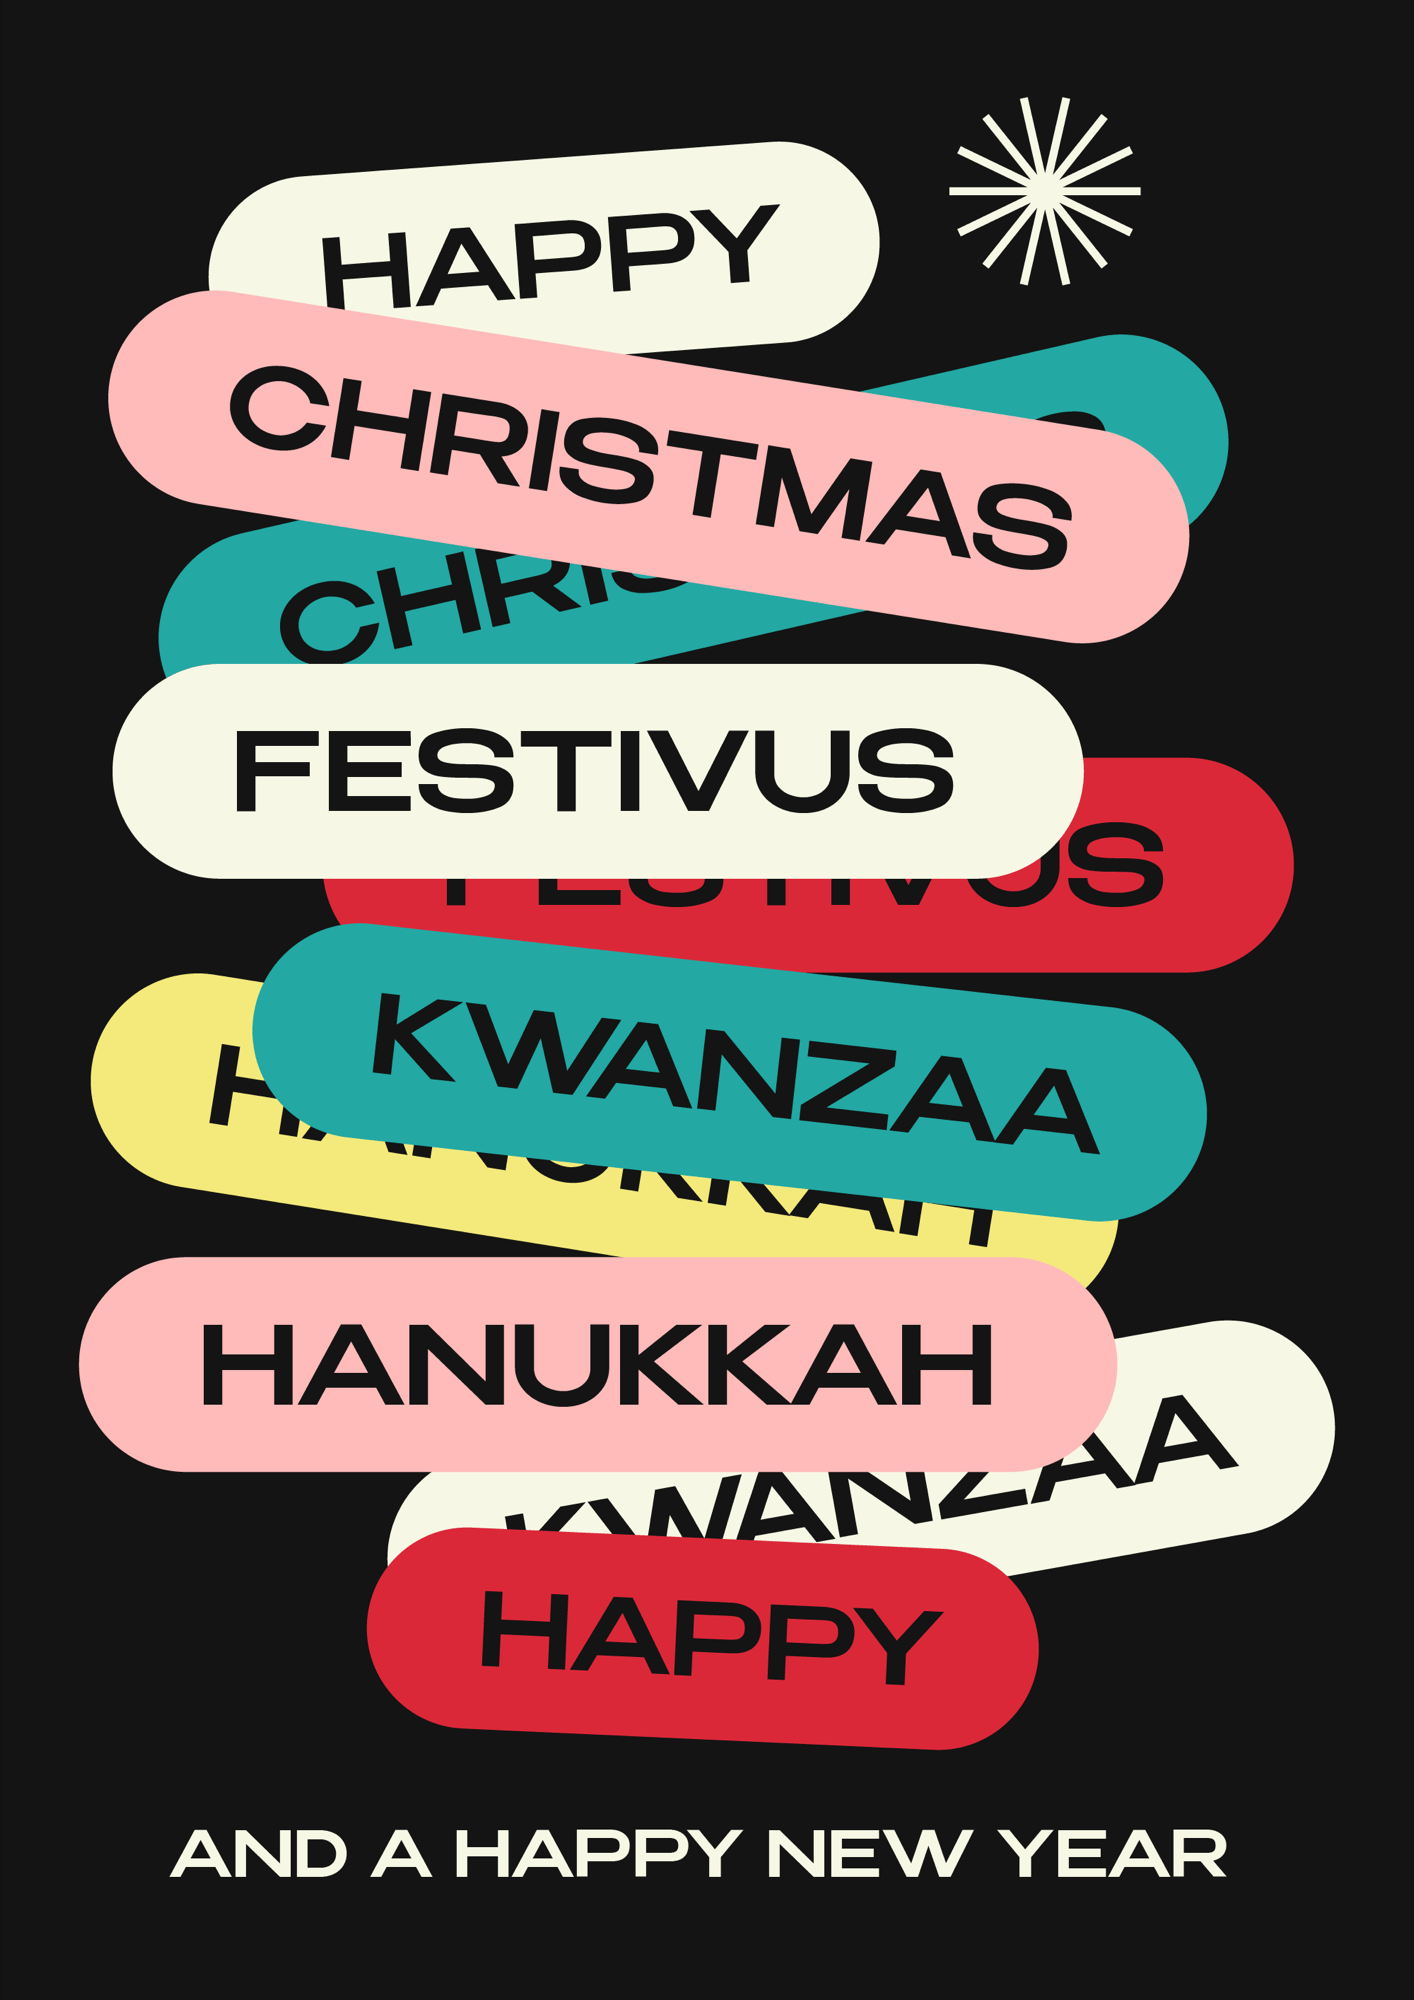 Happy Christmas, Festivus, Hanukkah, Kwanzaa | Edition 02 | POSTER | FREE